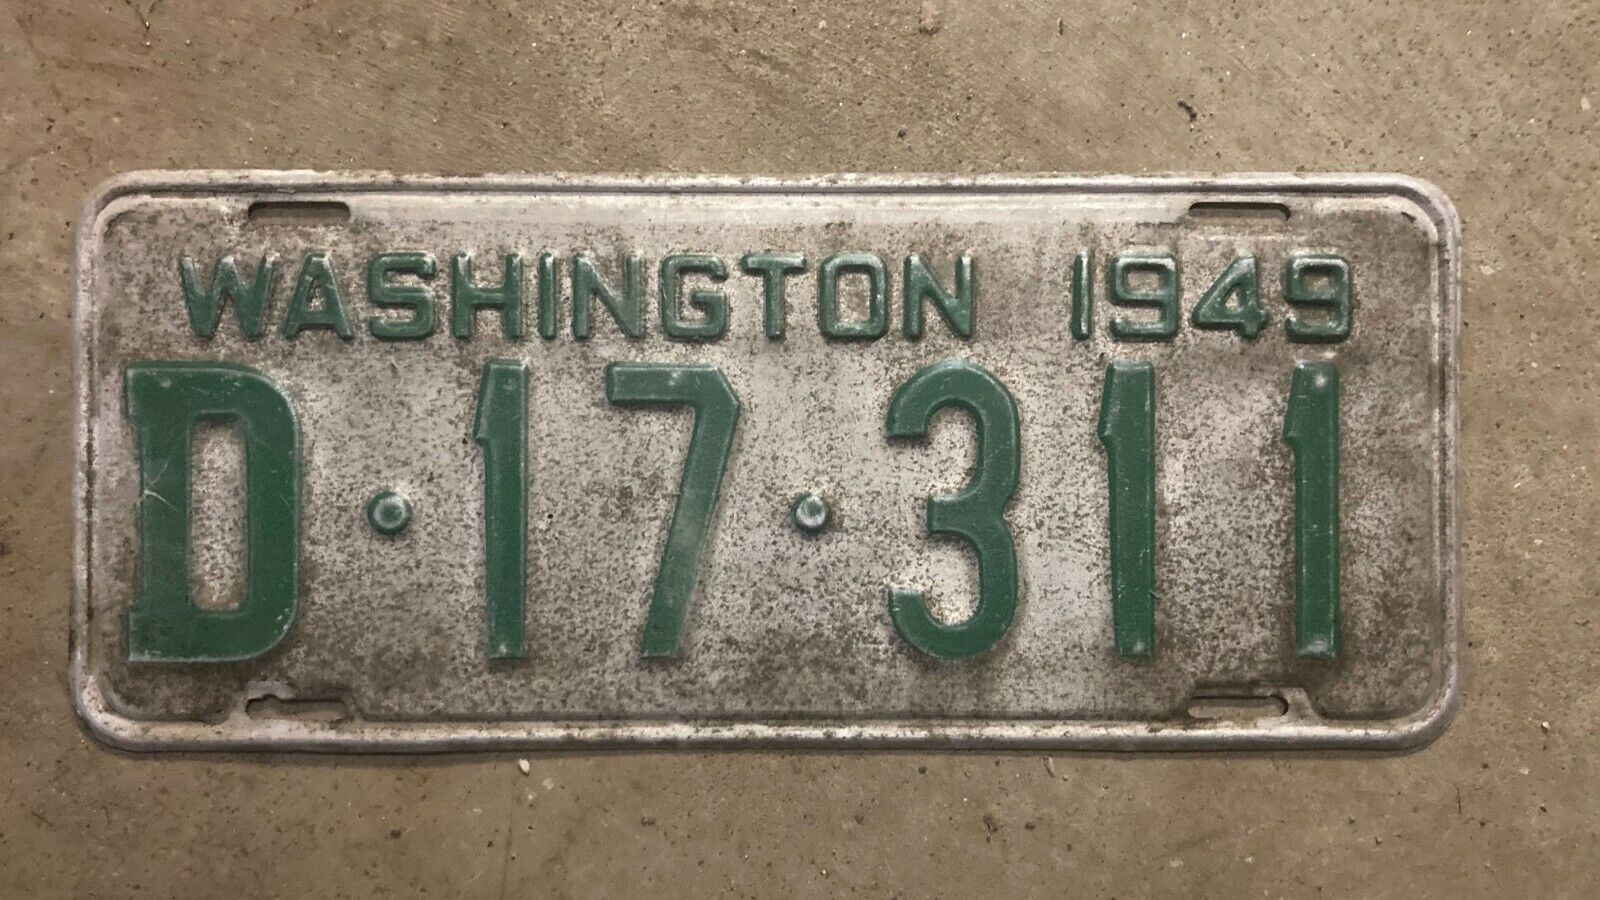 1949 Washington license plate D-17-311 1948 DMV YOM clear Ford Chevy Snohomish